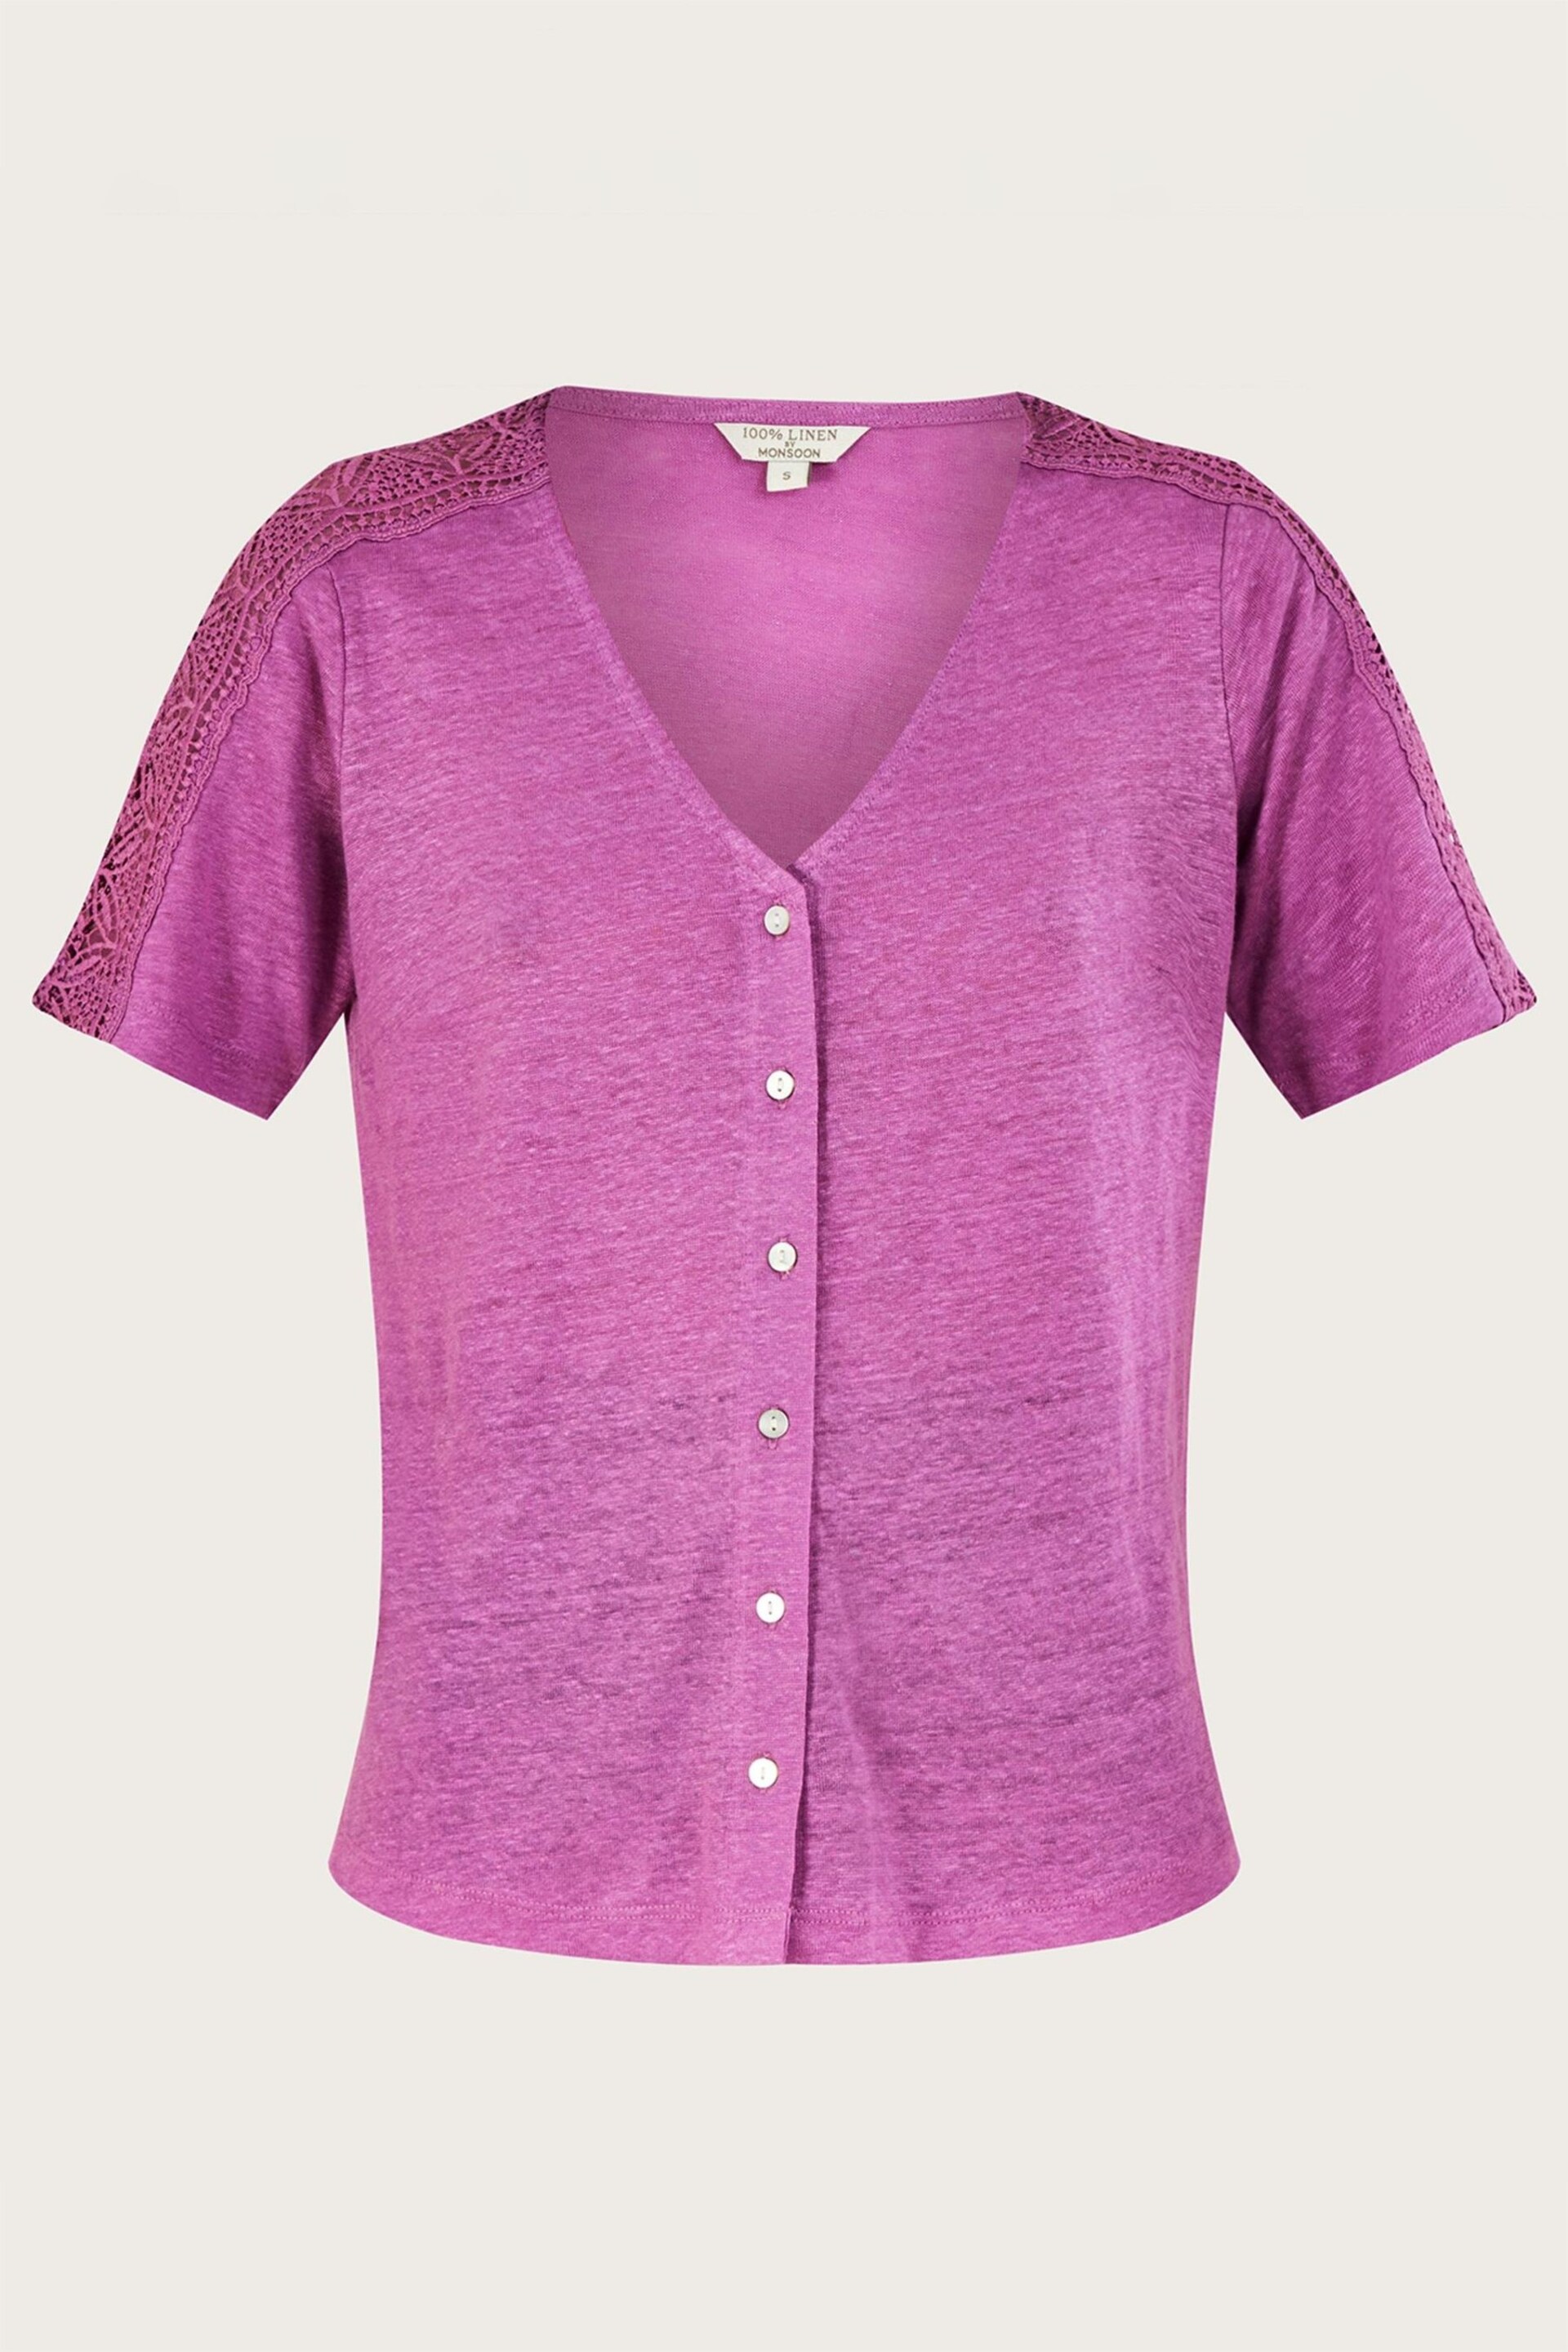 Monsoon Purple Button Through Lace Linen T-Shirt - Image 4 of 4